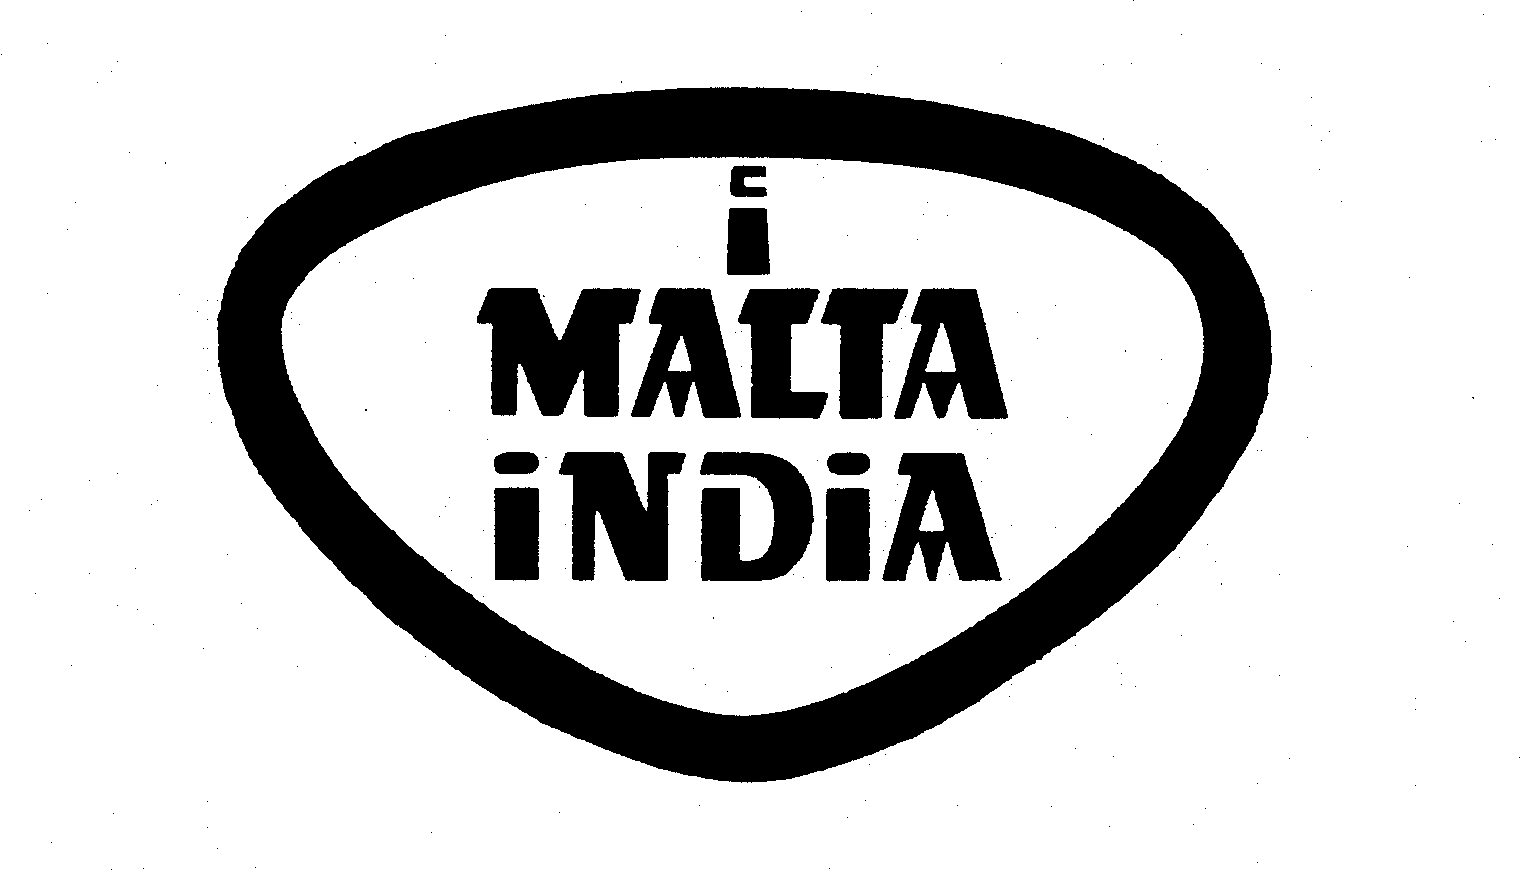  MALTA INDIA